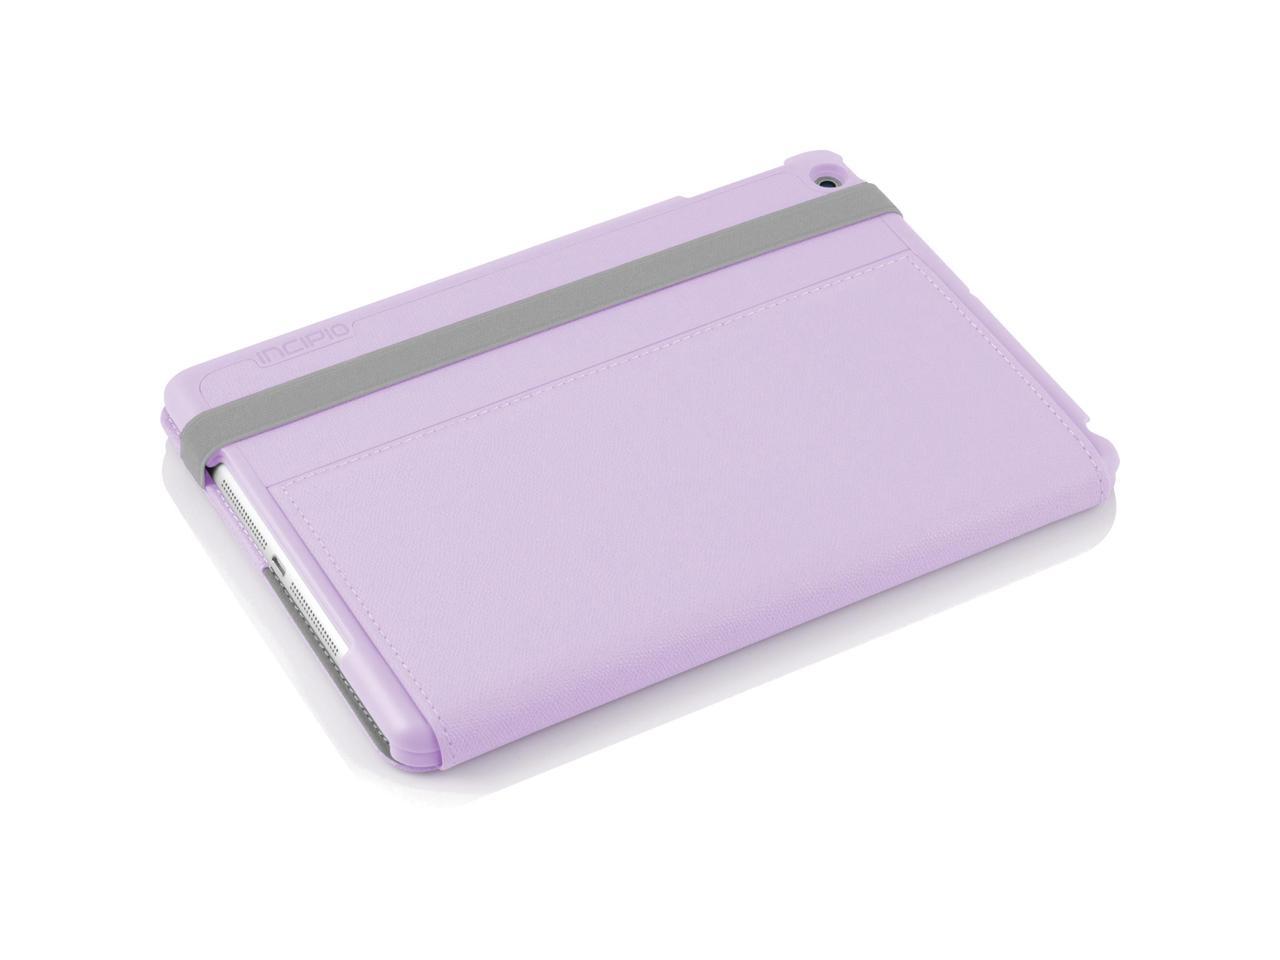 Étui Incipio Watson compatible avec iPad Air , Violet